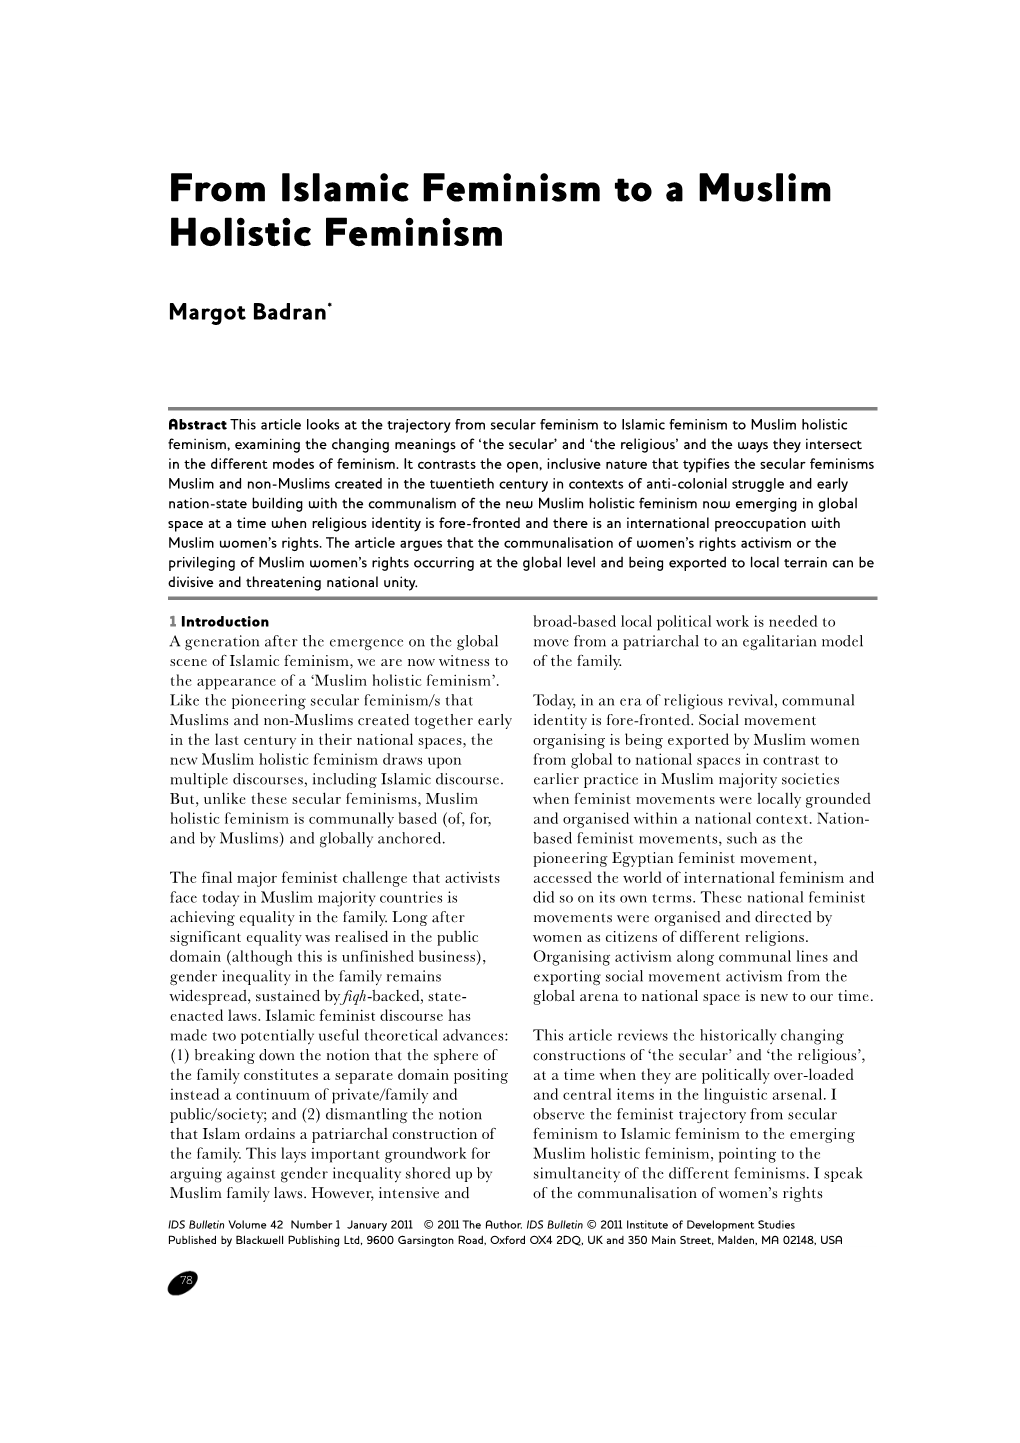 From Islamic Feminism to a Muslim Holistic Feminism